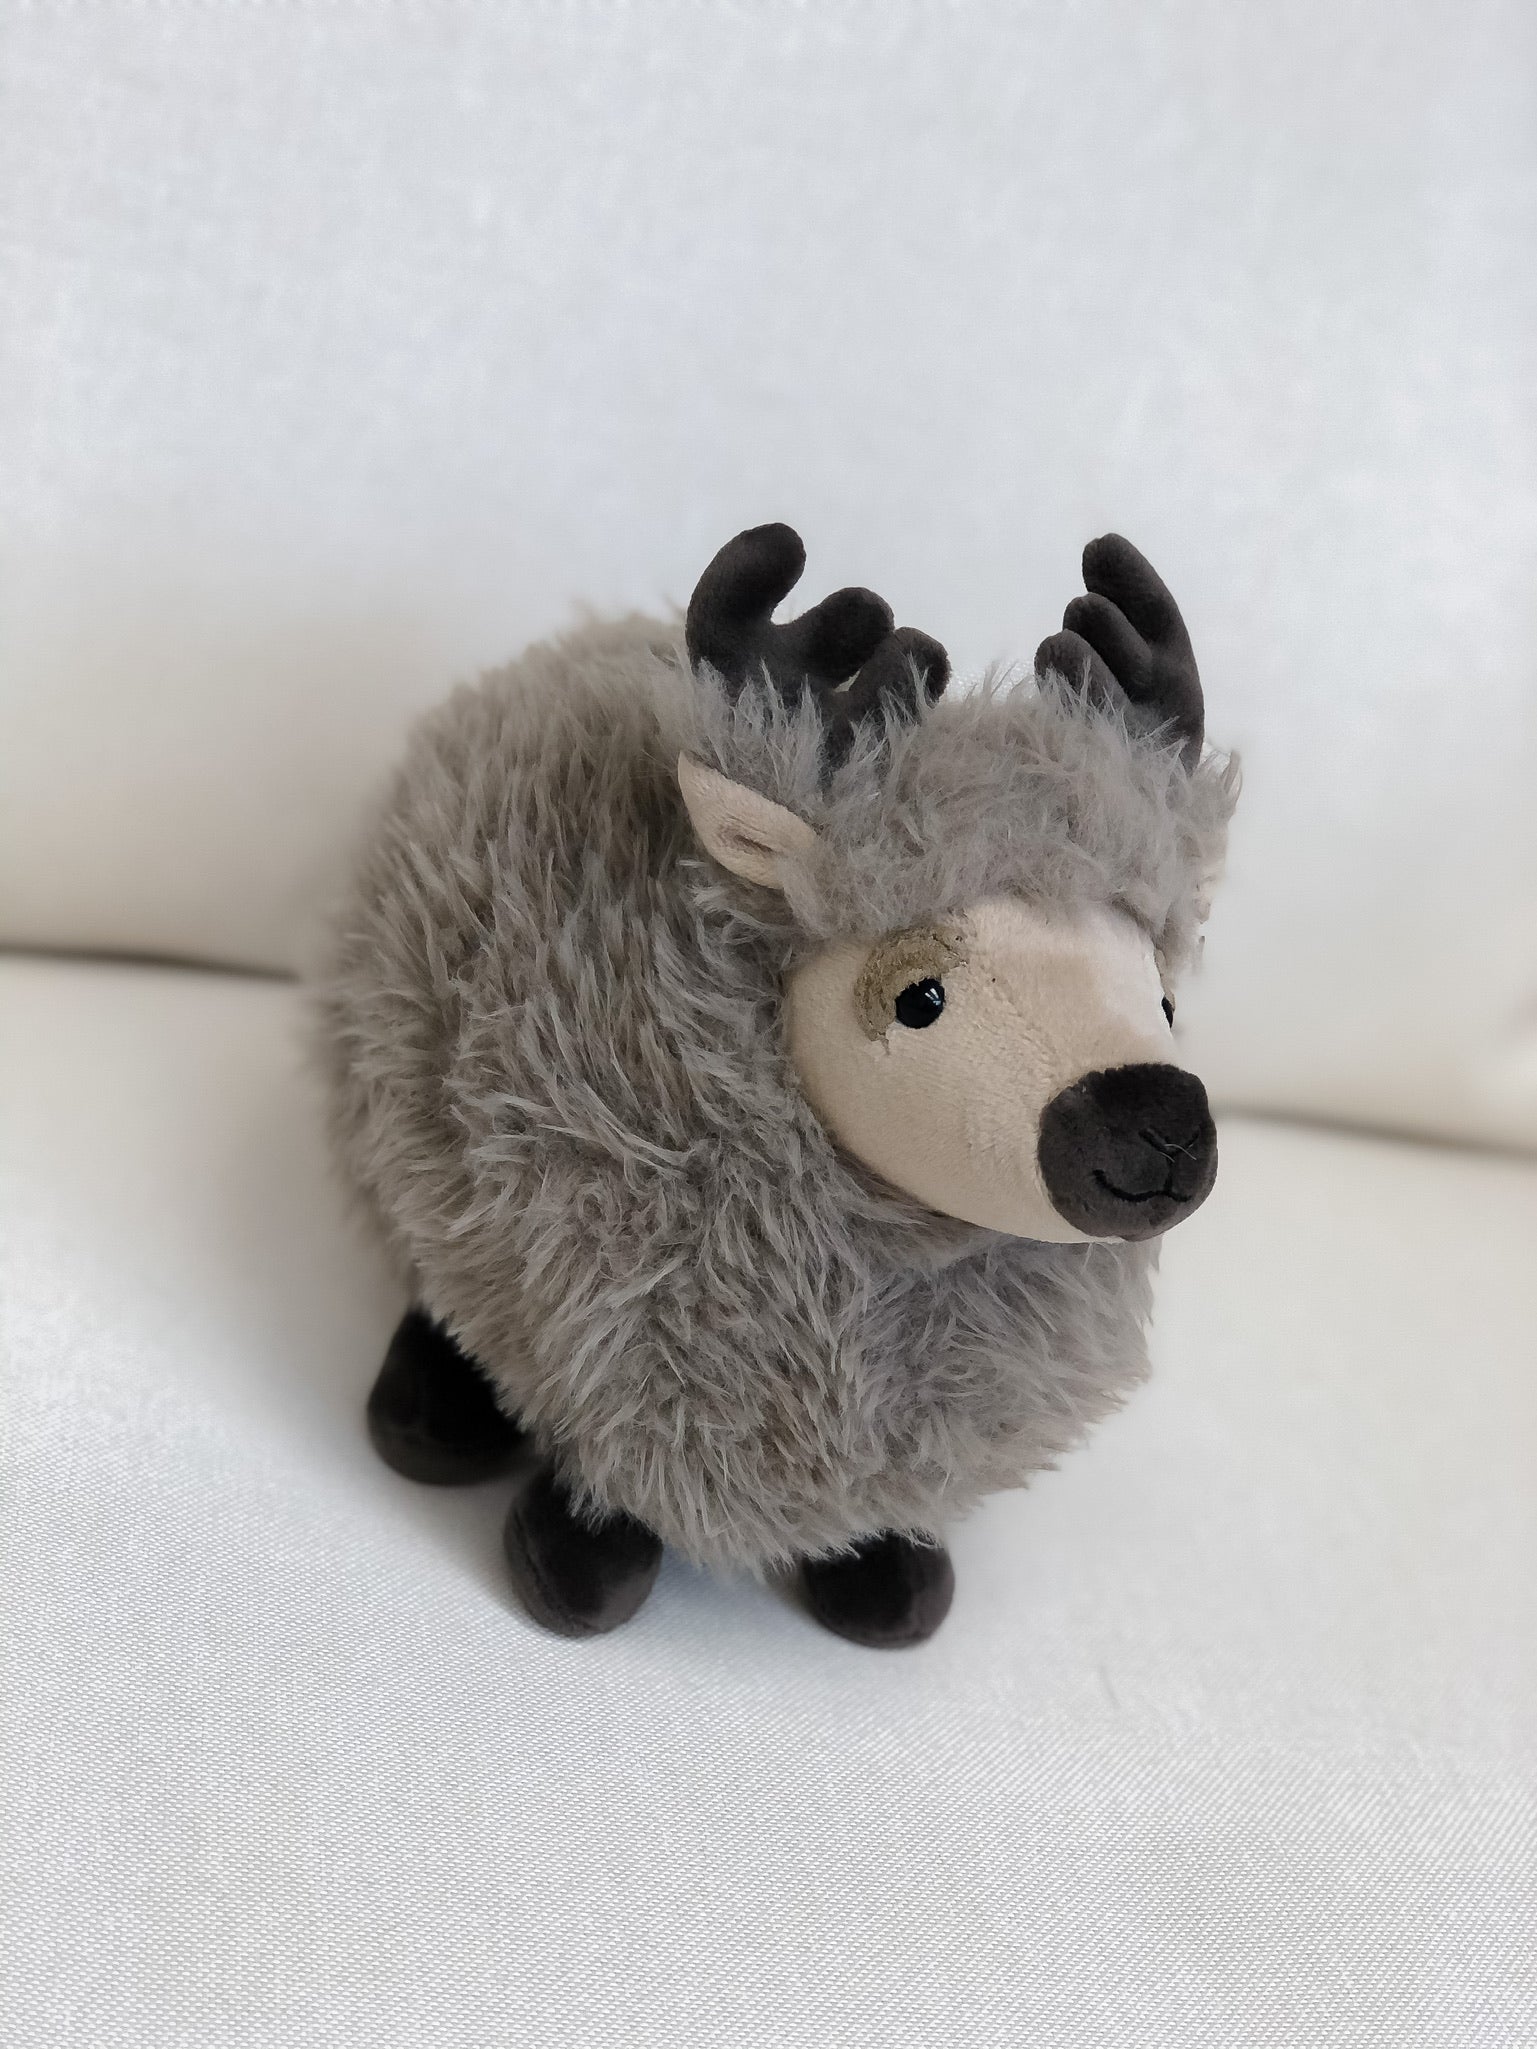 small stuffed reindeer